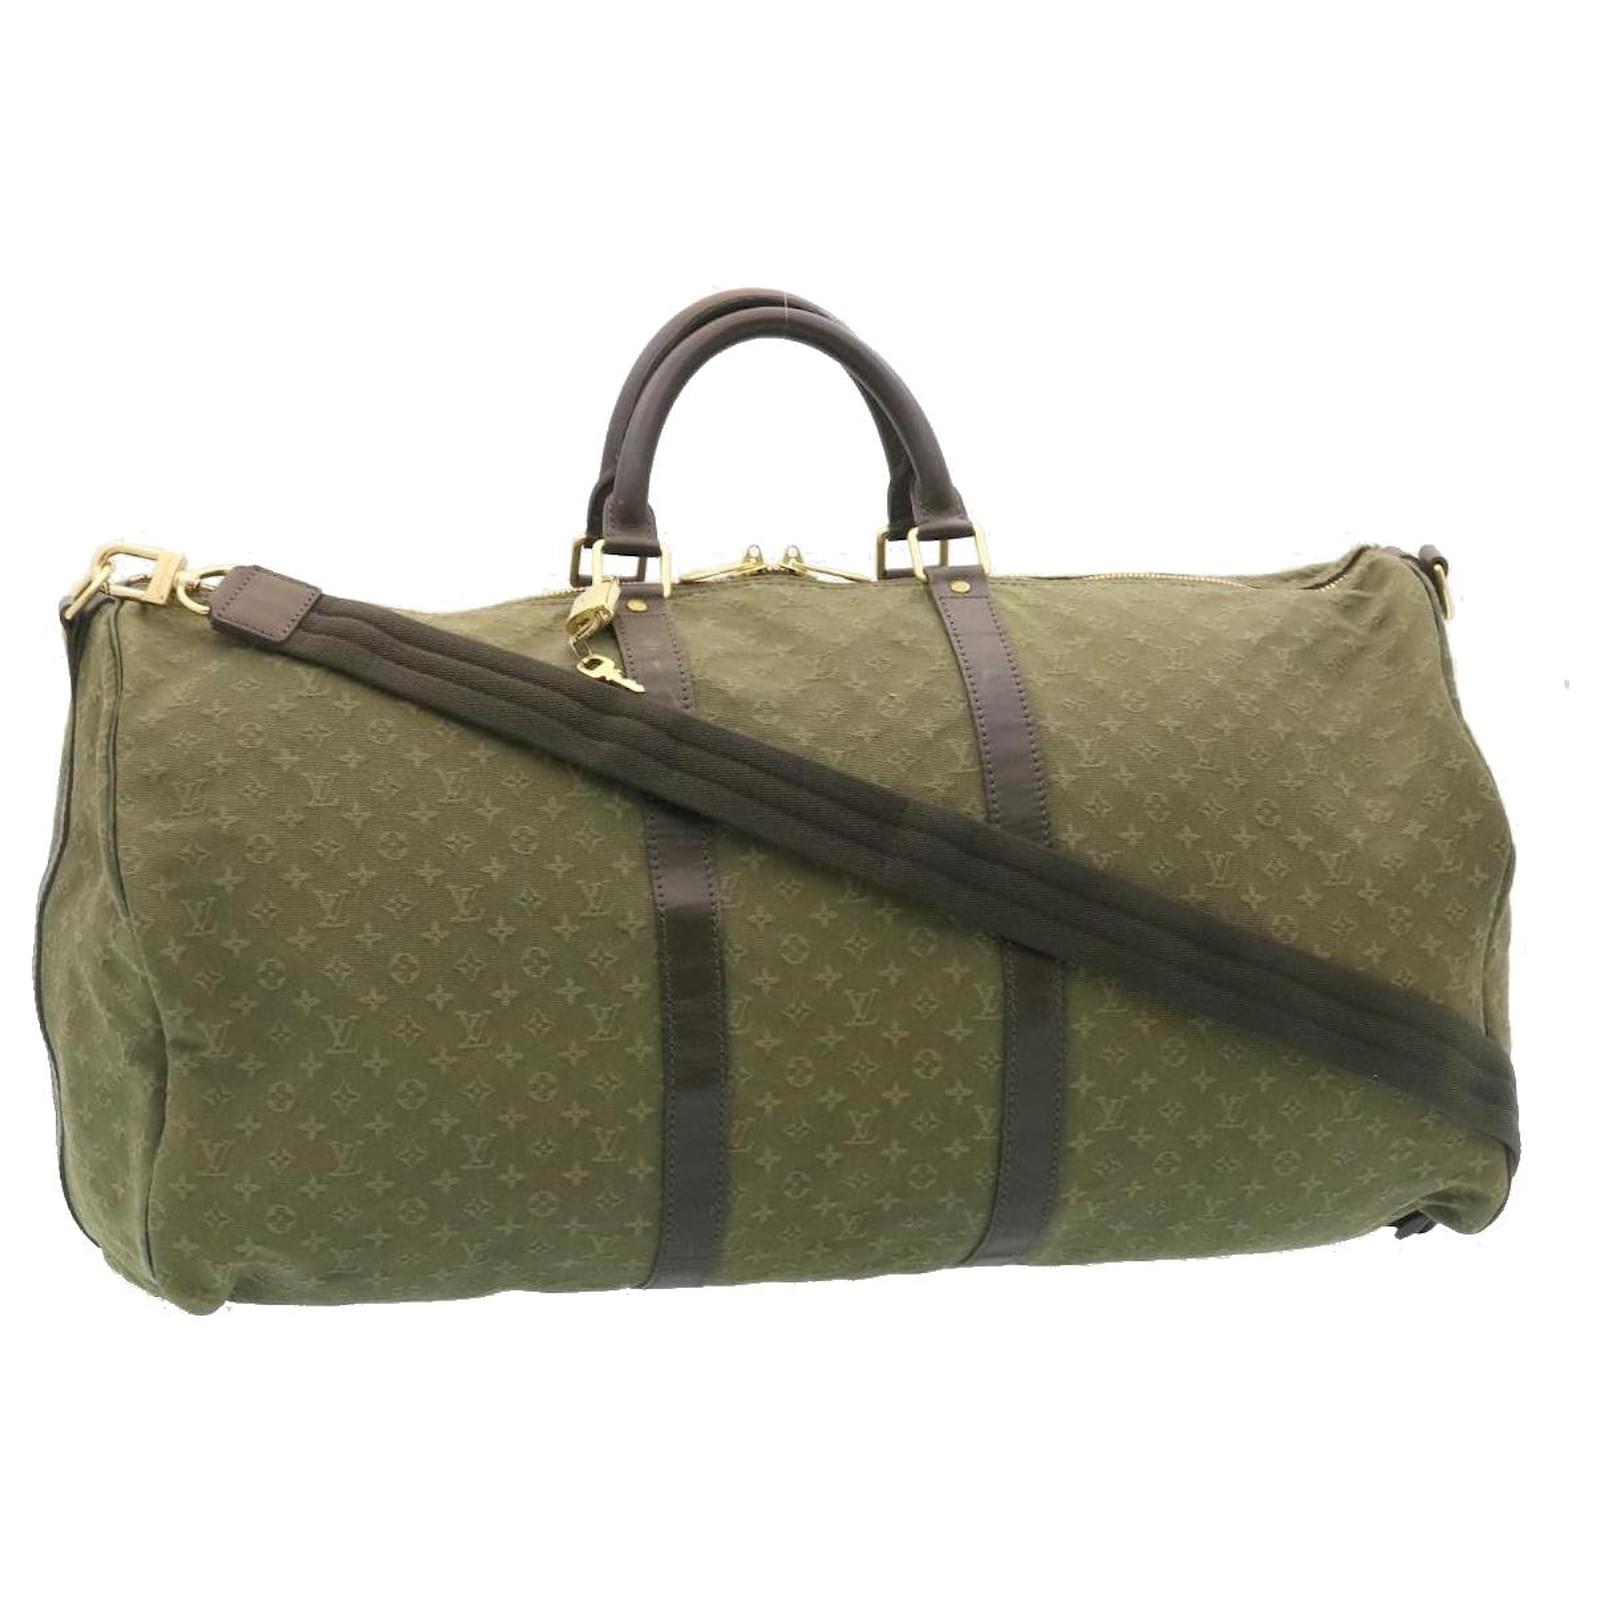 Louis Vuitton Monogram Mini Duffle Bag